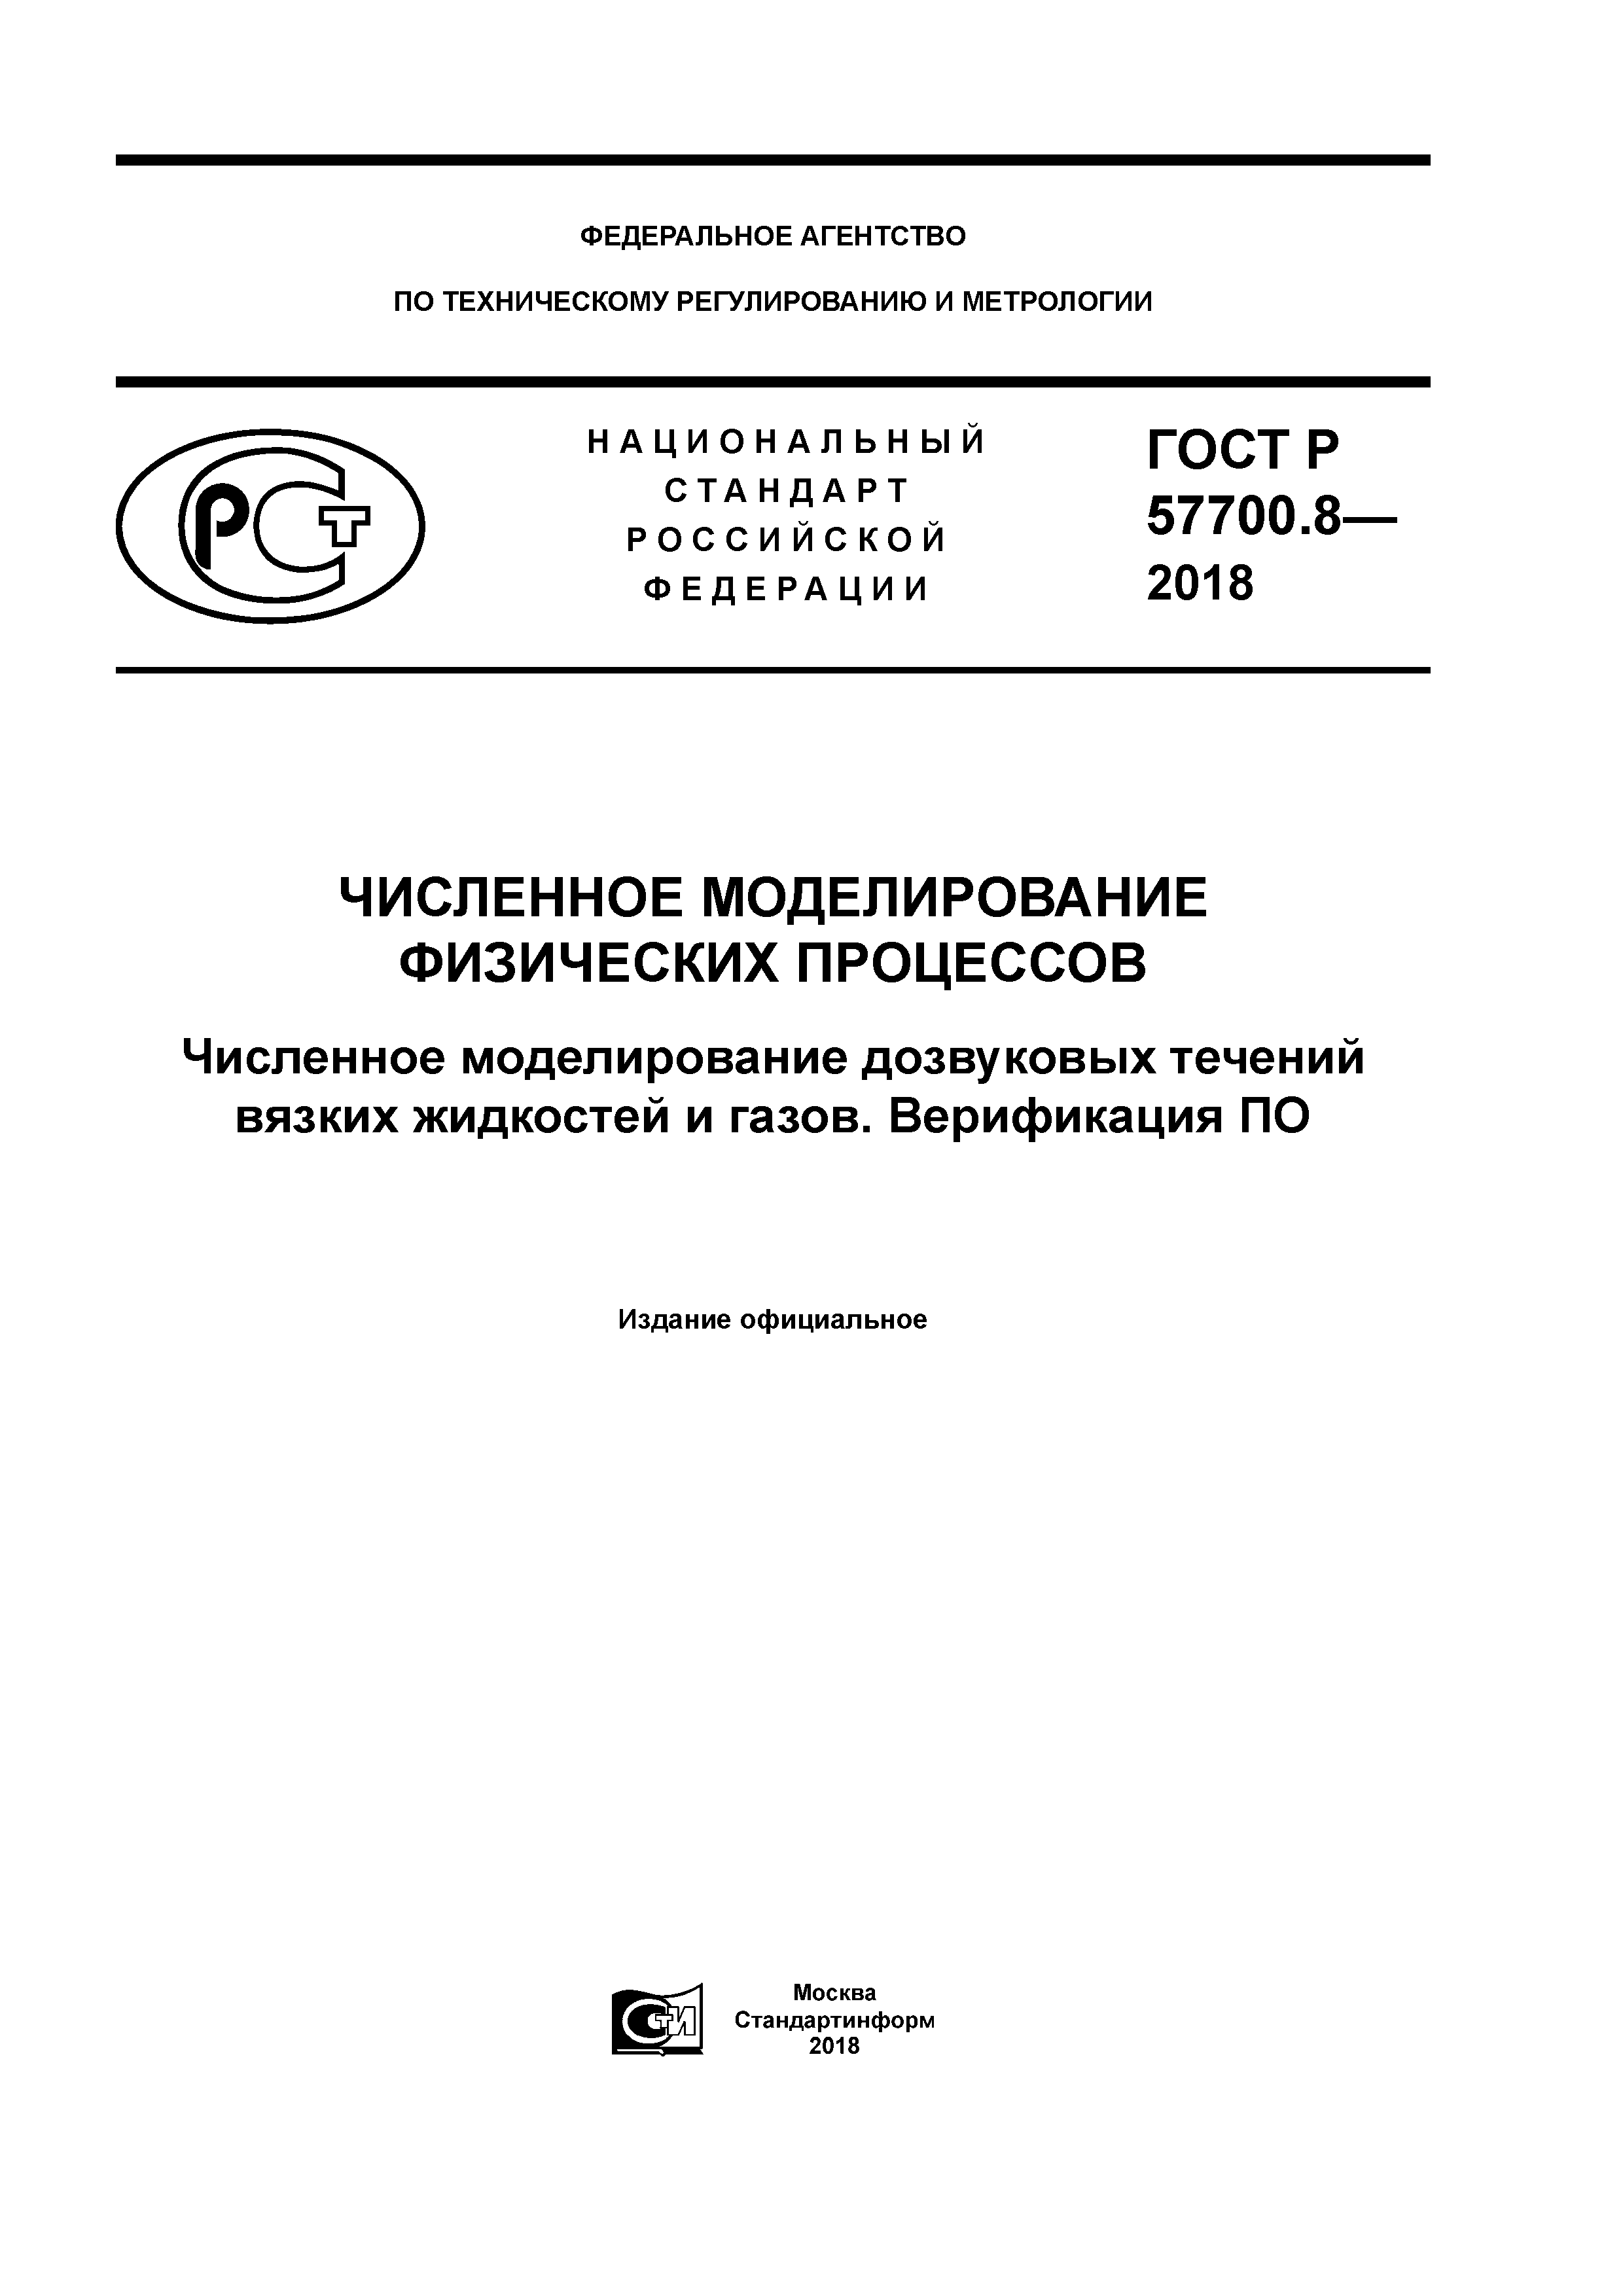 ГОСТ Р 57700.8-2018